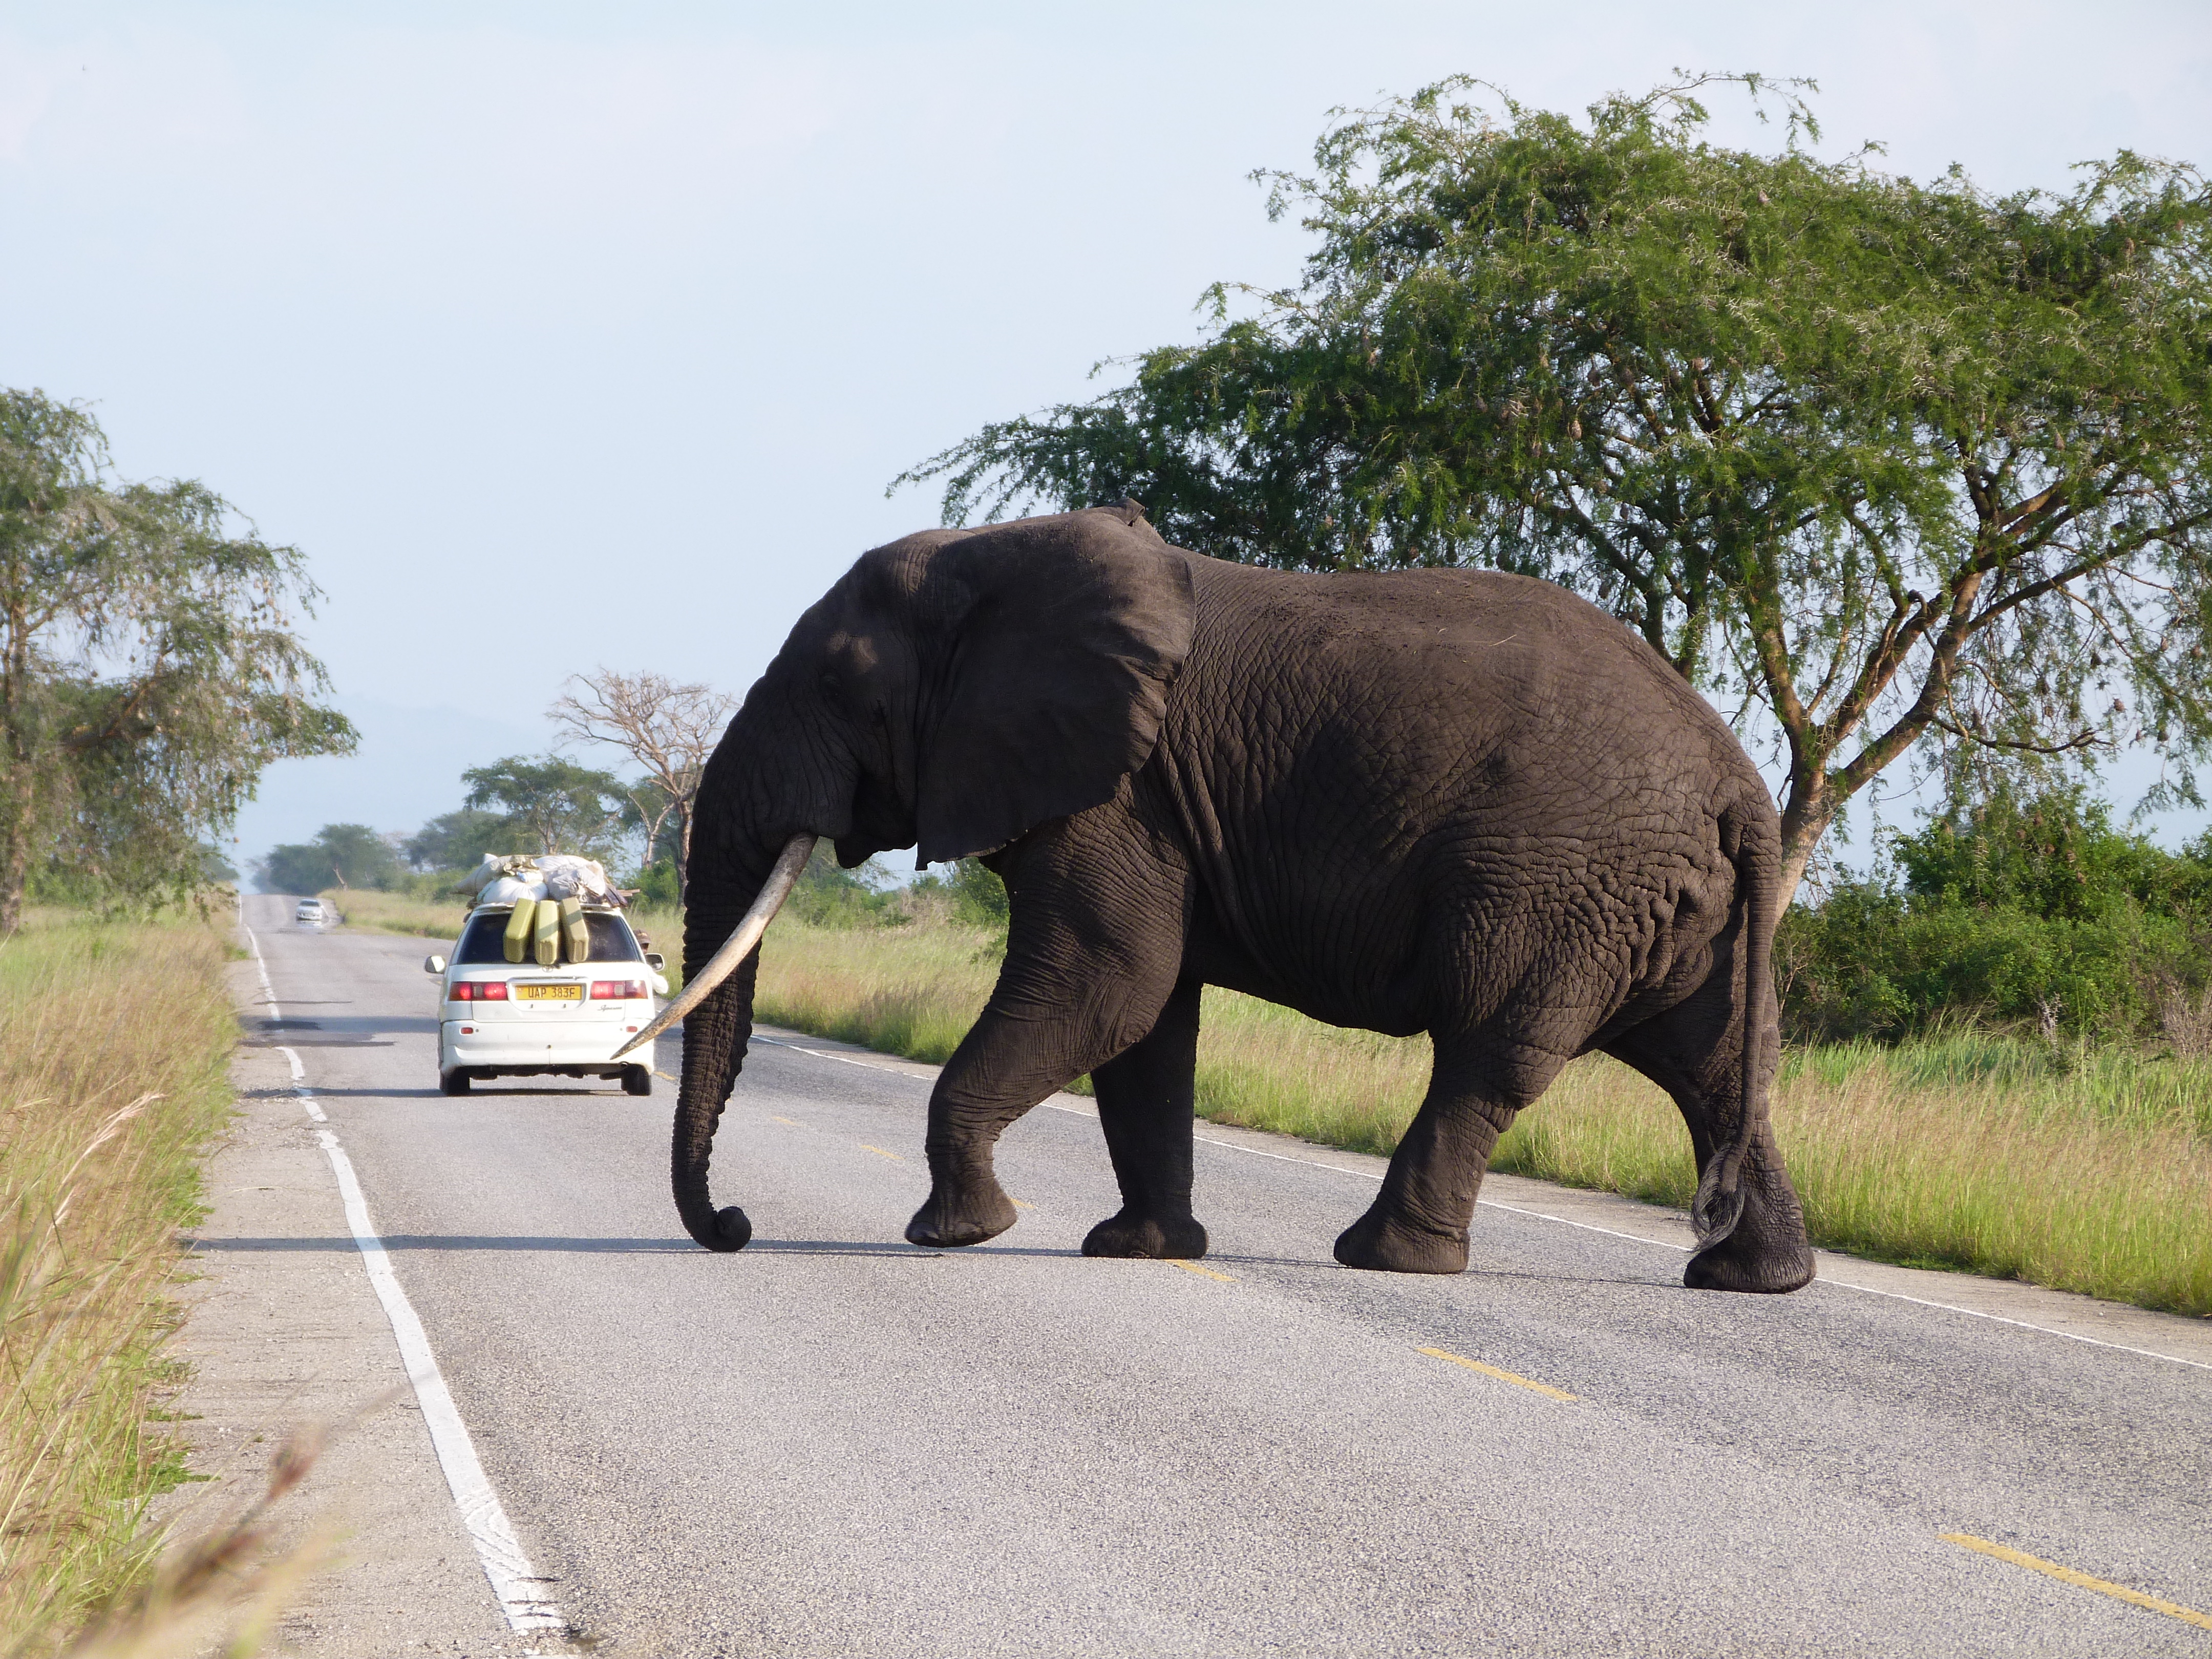 Image: Elephant in east Africa (September 2014), credit: Dr Colin Beale